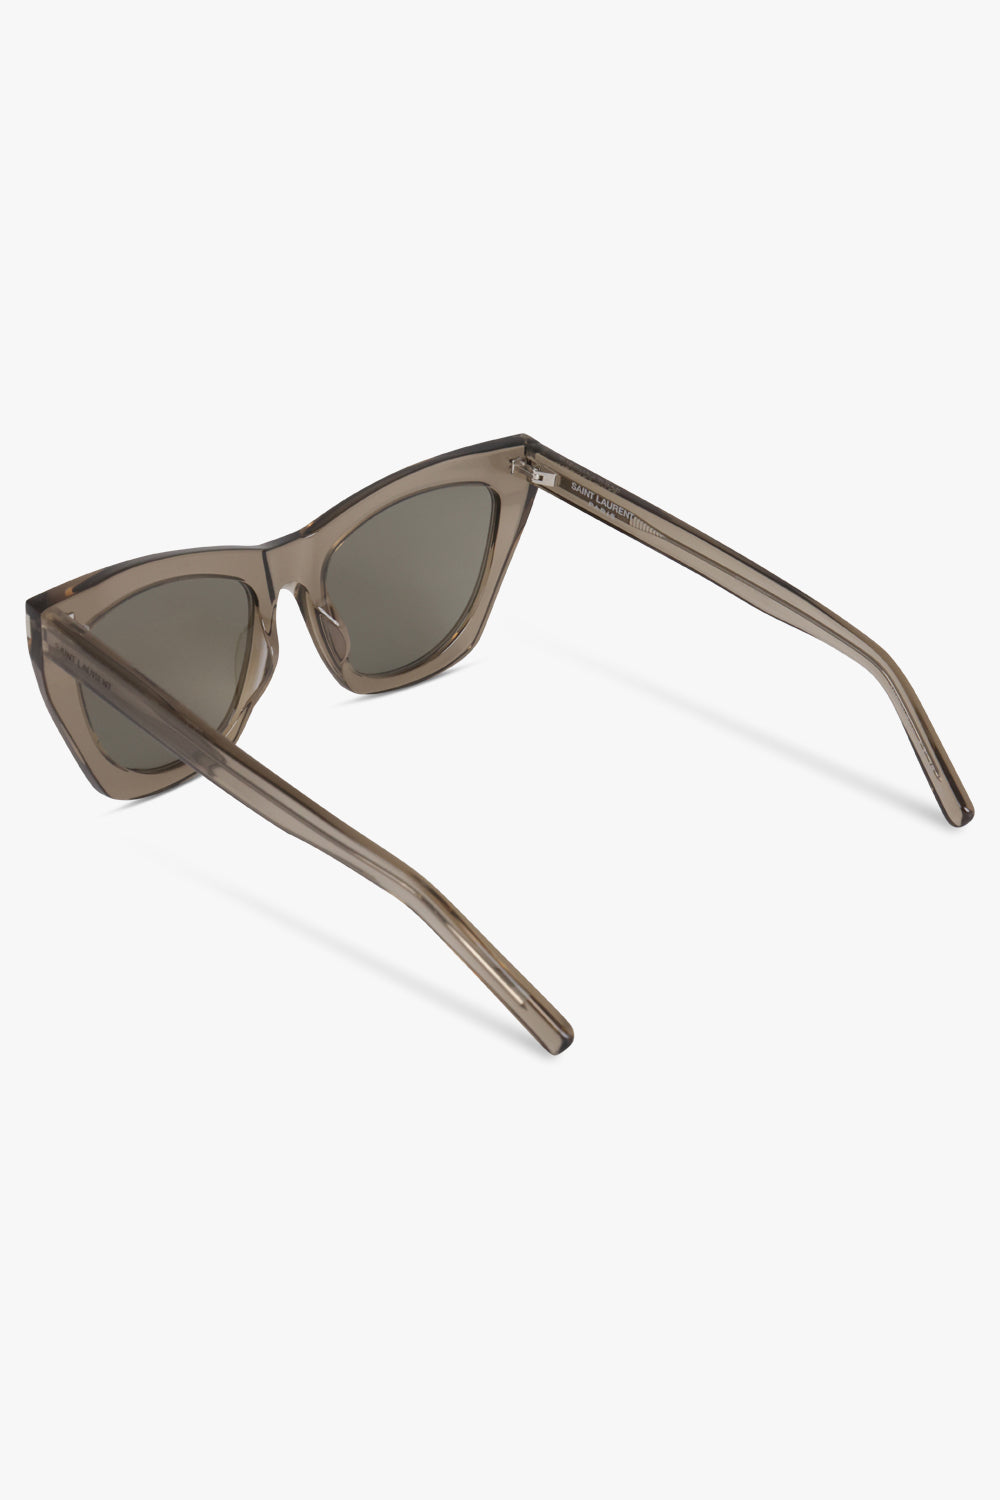 SAINT LAURENT SUNGLASSES Brown SL 214 KATE Sunglasses | Transparent Brown/Light Grey